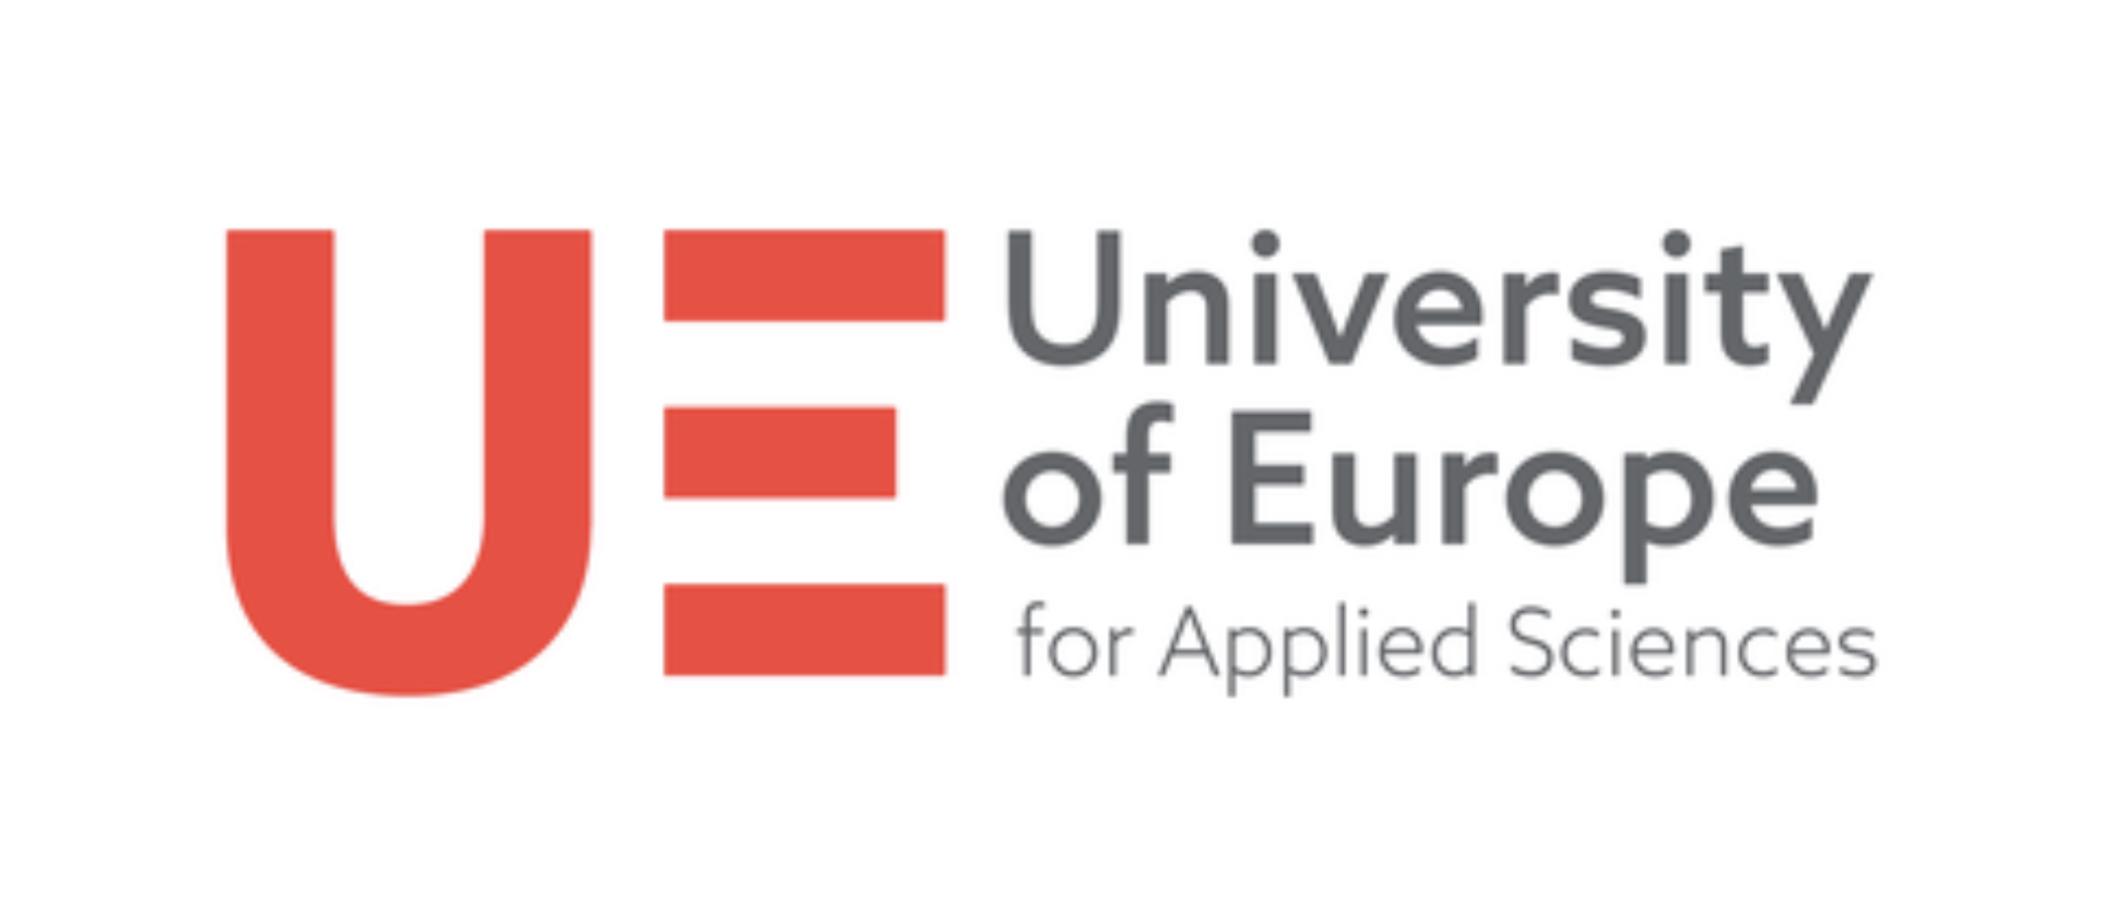 University of Europe